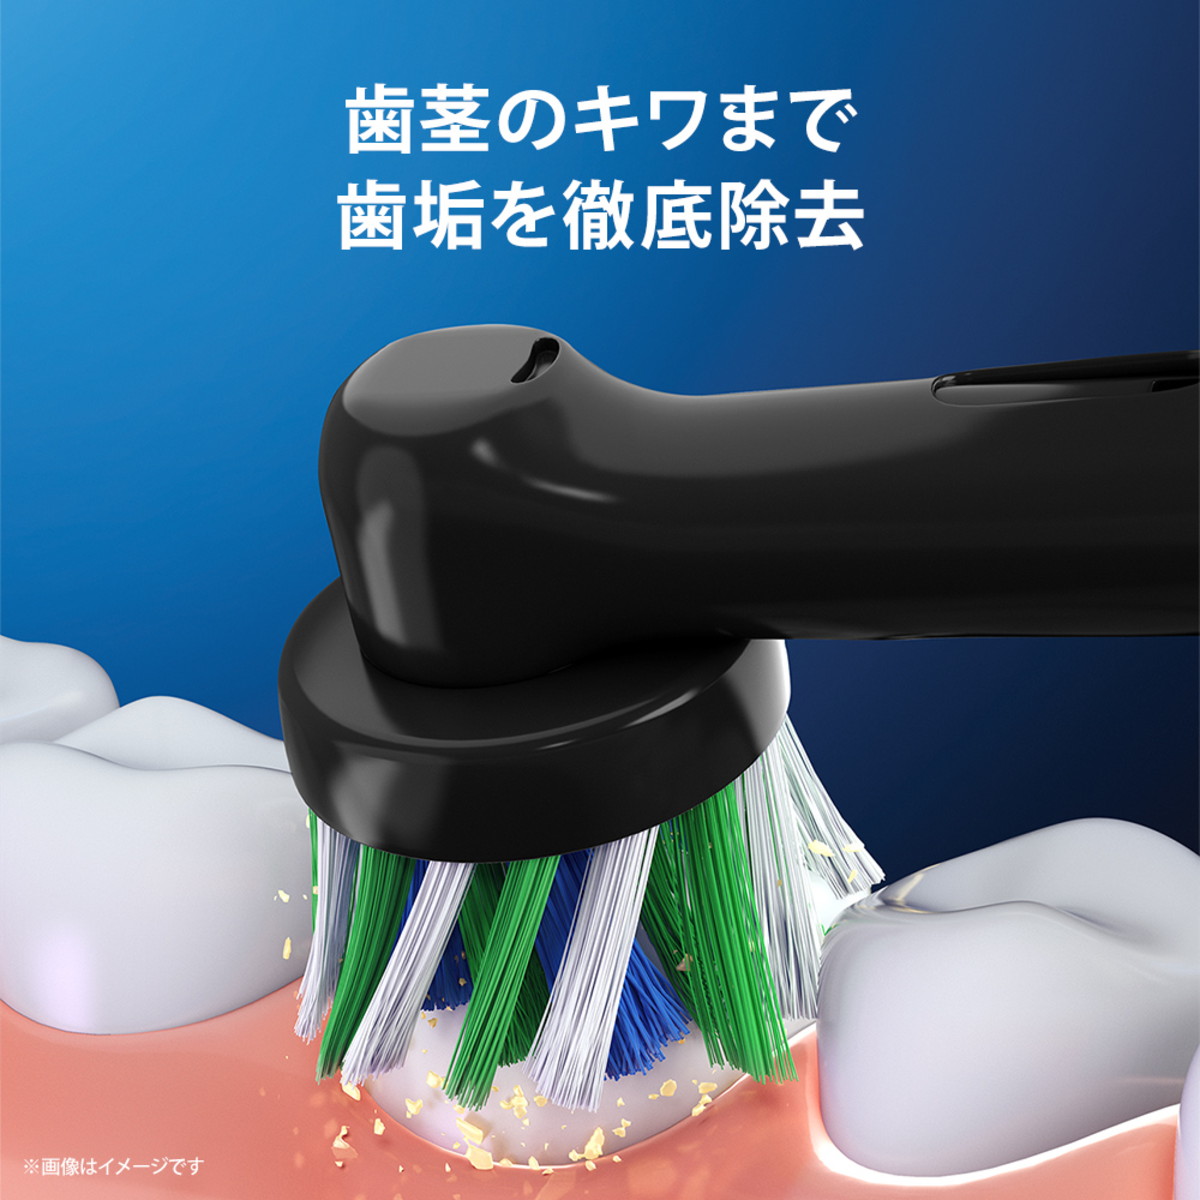 BRAUN オーラルB 電動歯ブラシ スミズミクリーンＰＲＯ ミントグリーン